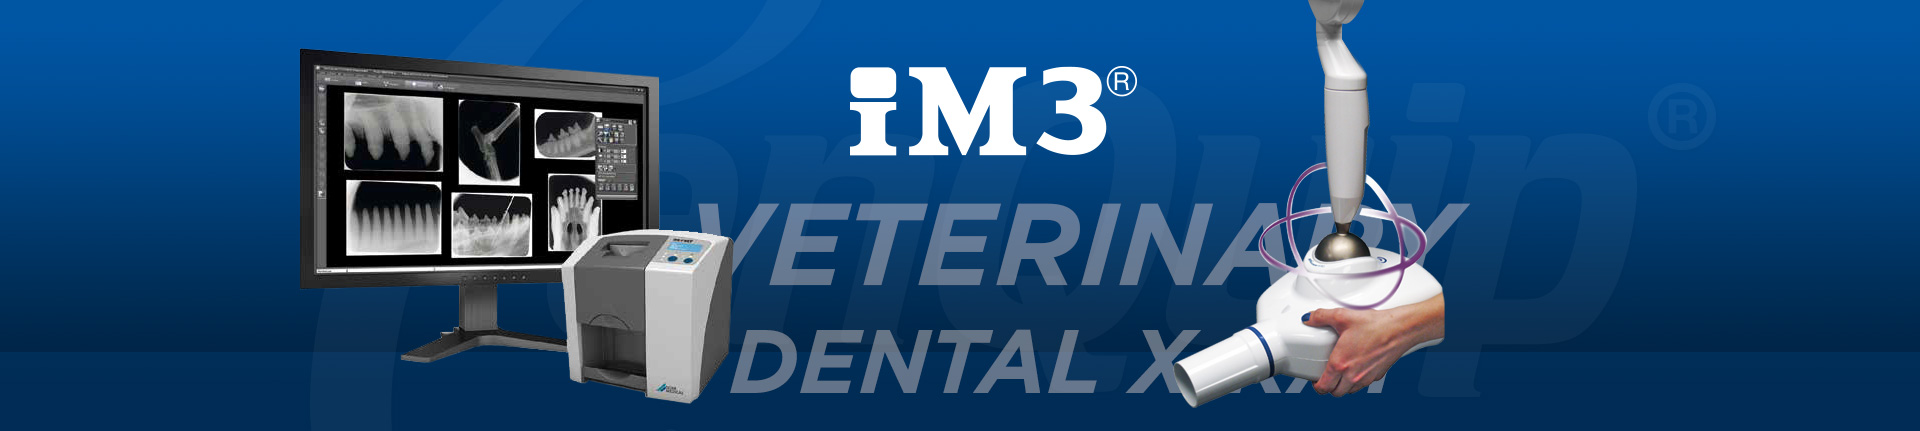 Veterinary Dental X-RAY iM3